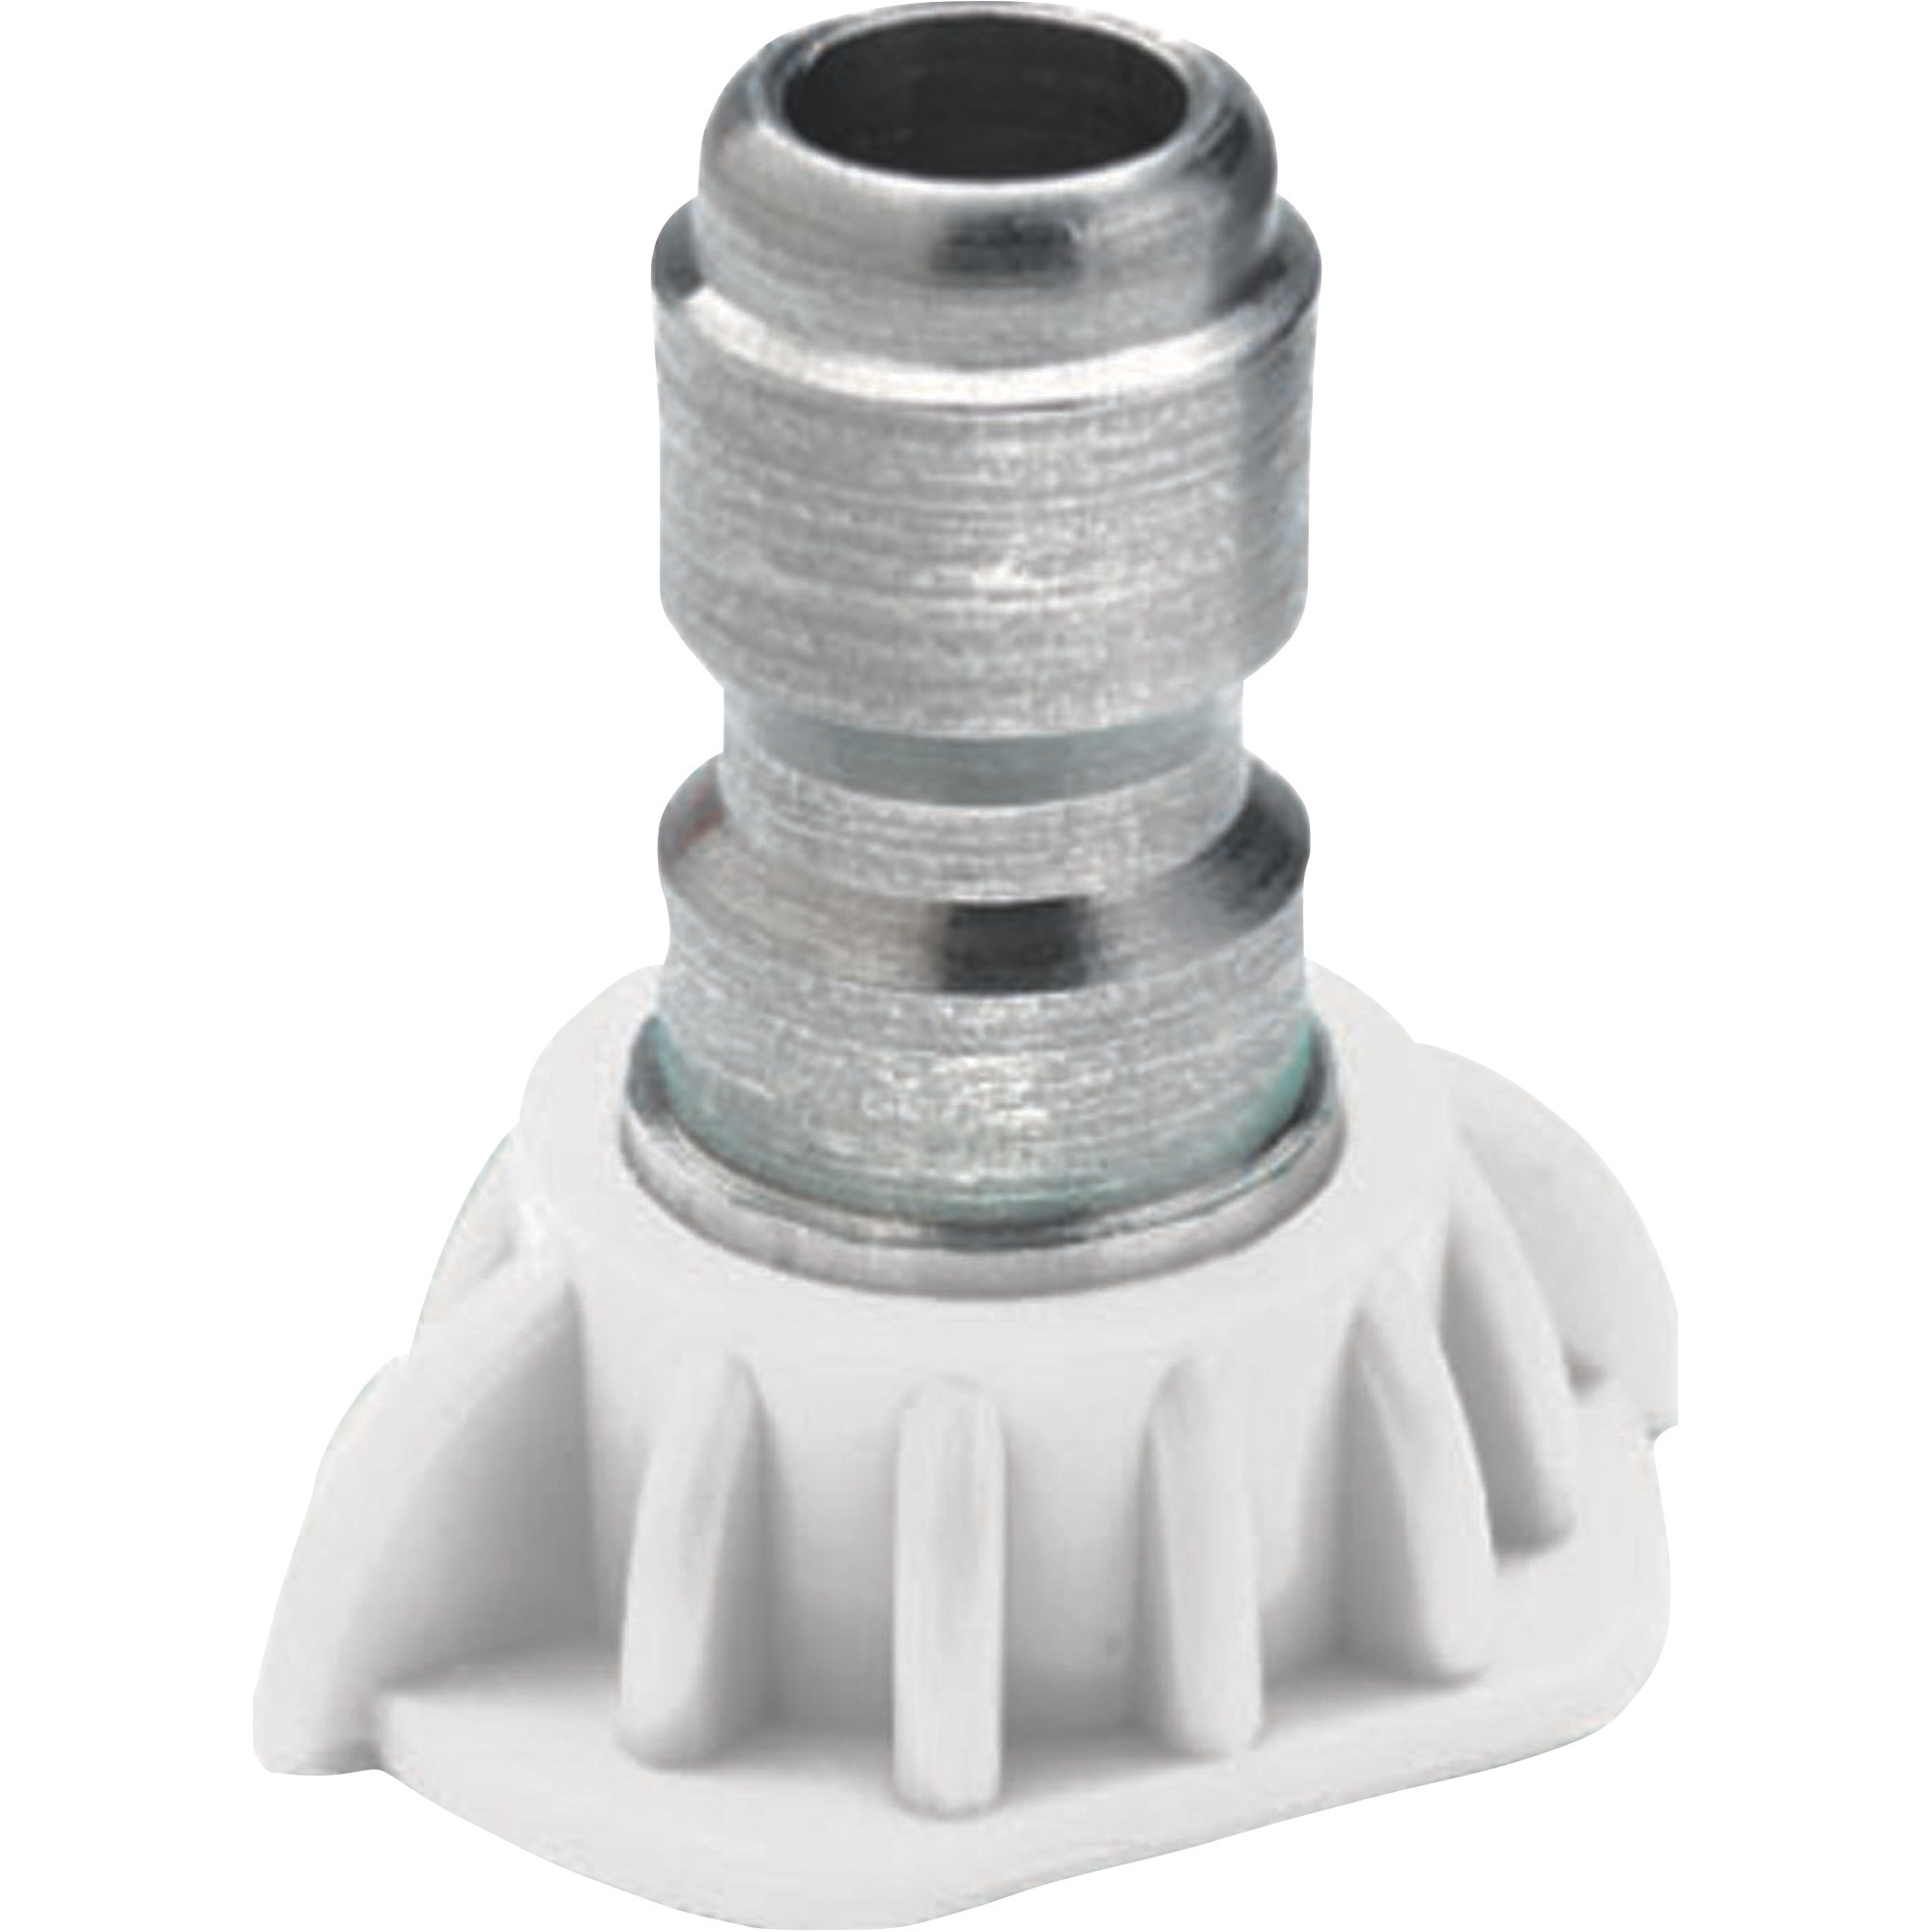 NorthStar Pressure Washer Quick Couple Spray Nozzle â 2.0 Size, 40 Degree Spray, Model N40020QP